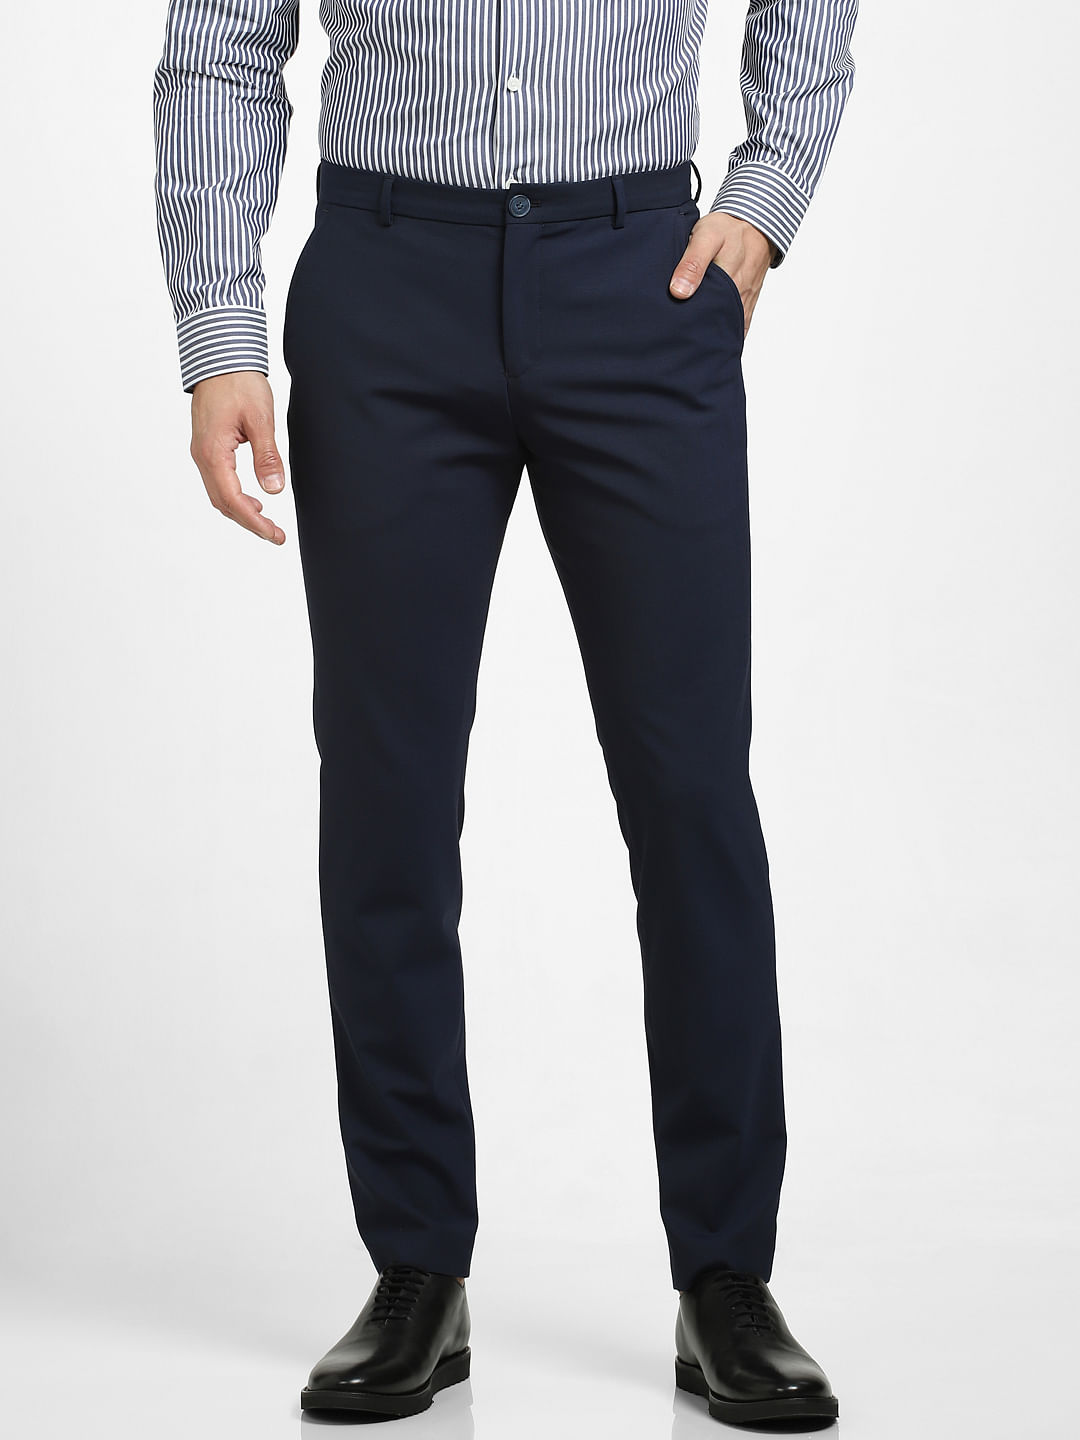 Buy Cliths Cotton Trousers for Men Navy BlueFormal Pants for Men Slim Fit  at Amazonin